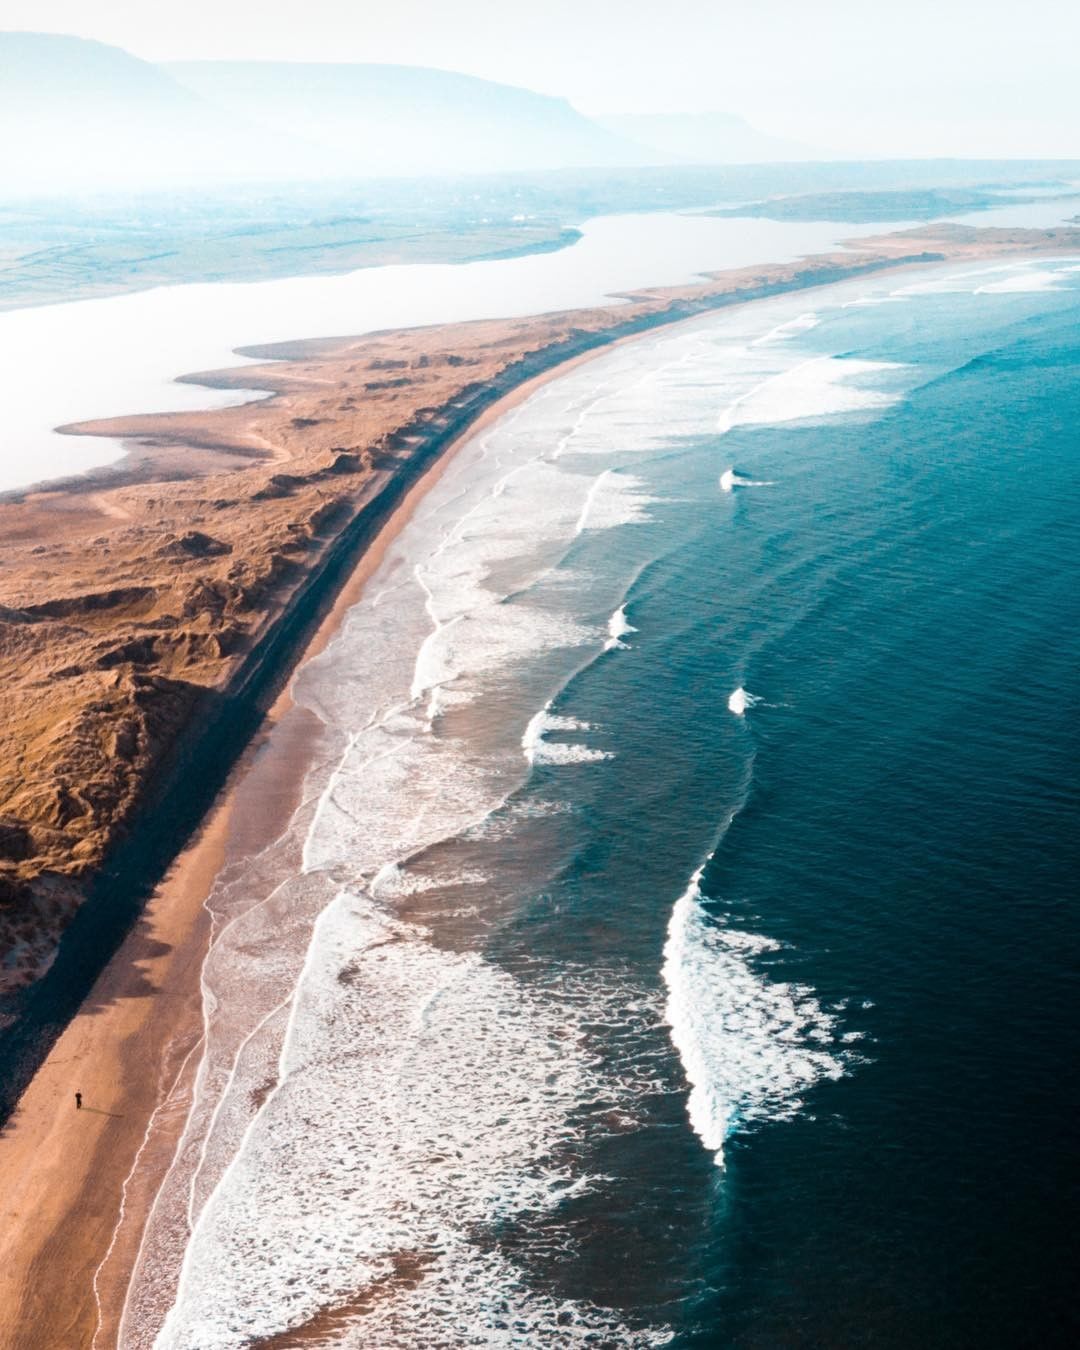 Lonely Planet names Ireland's 10 best beaches - Irish Coast & Country